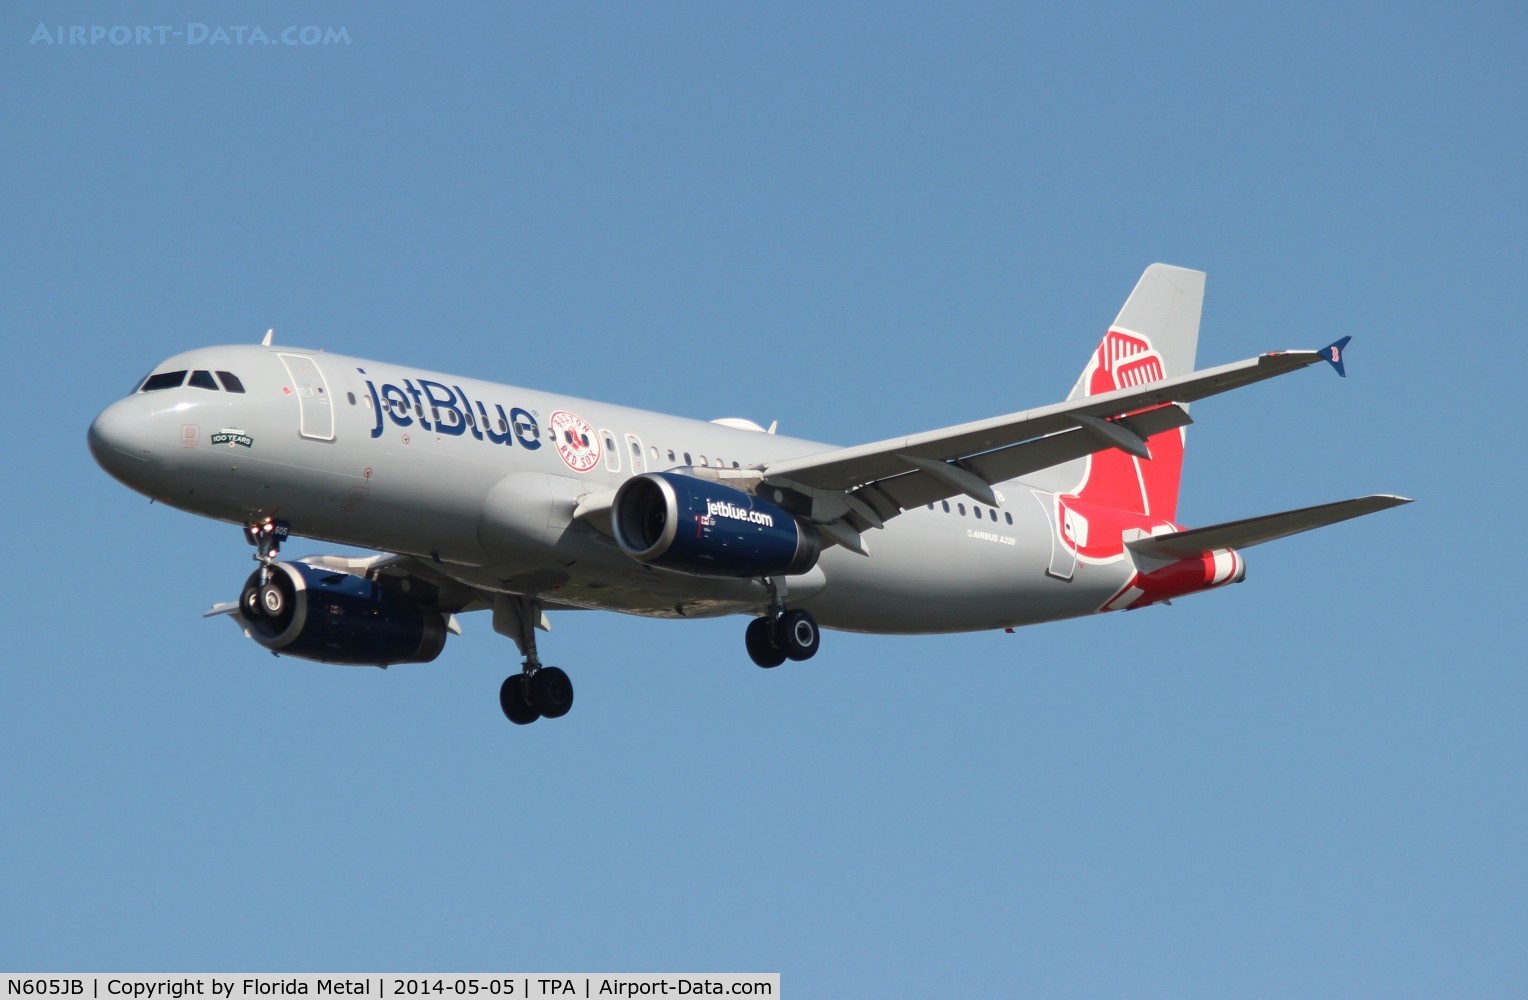 N605JB, 2005 Airbus A320-232 C/N 2368, Boston Red Sox